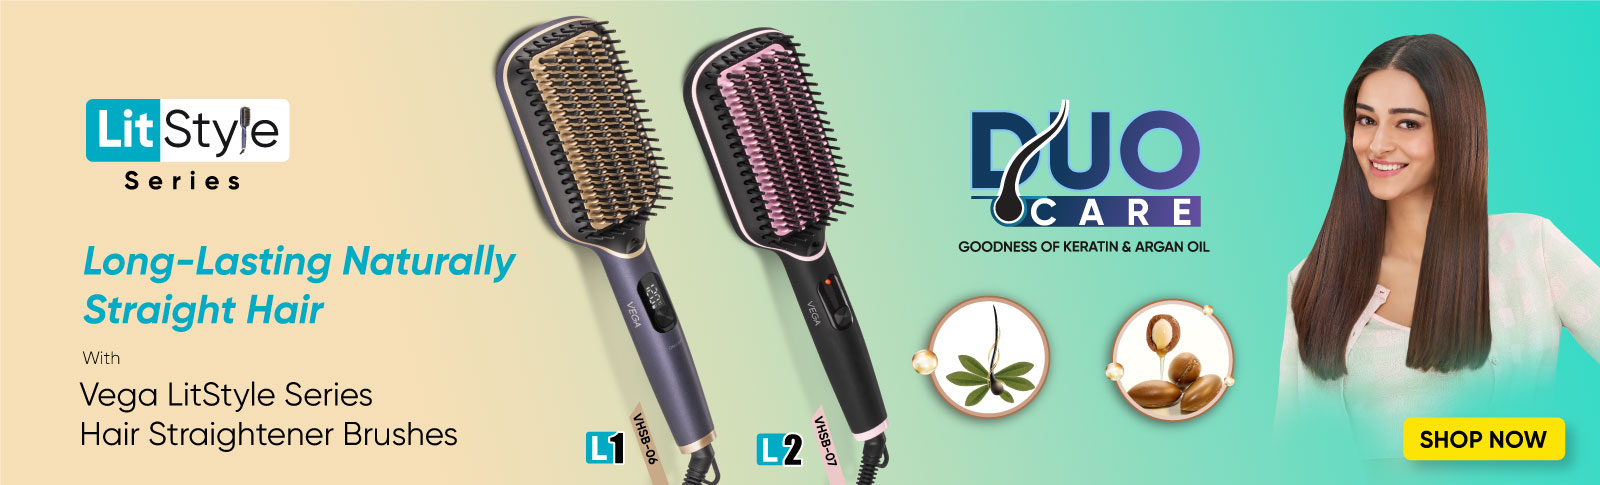 Lit style L2 Hair Straightener Brush